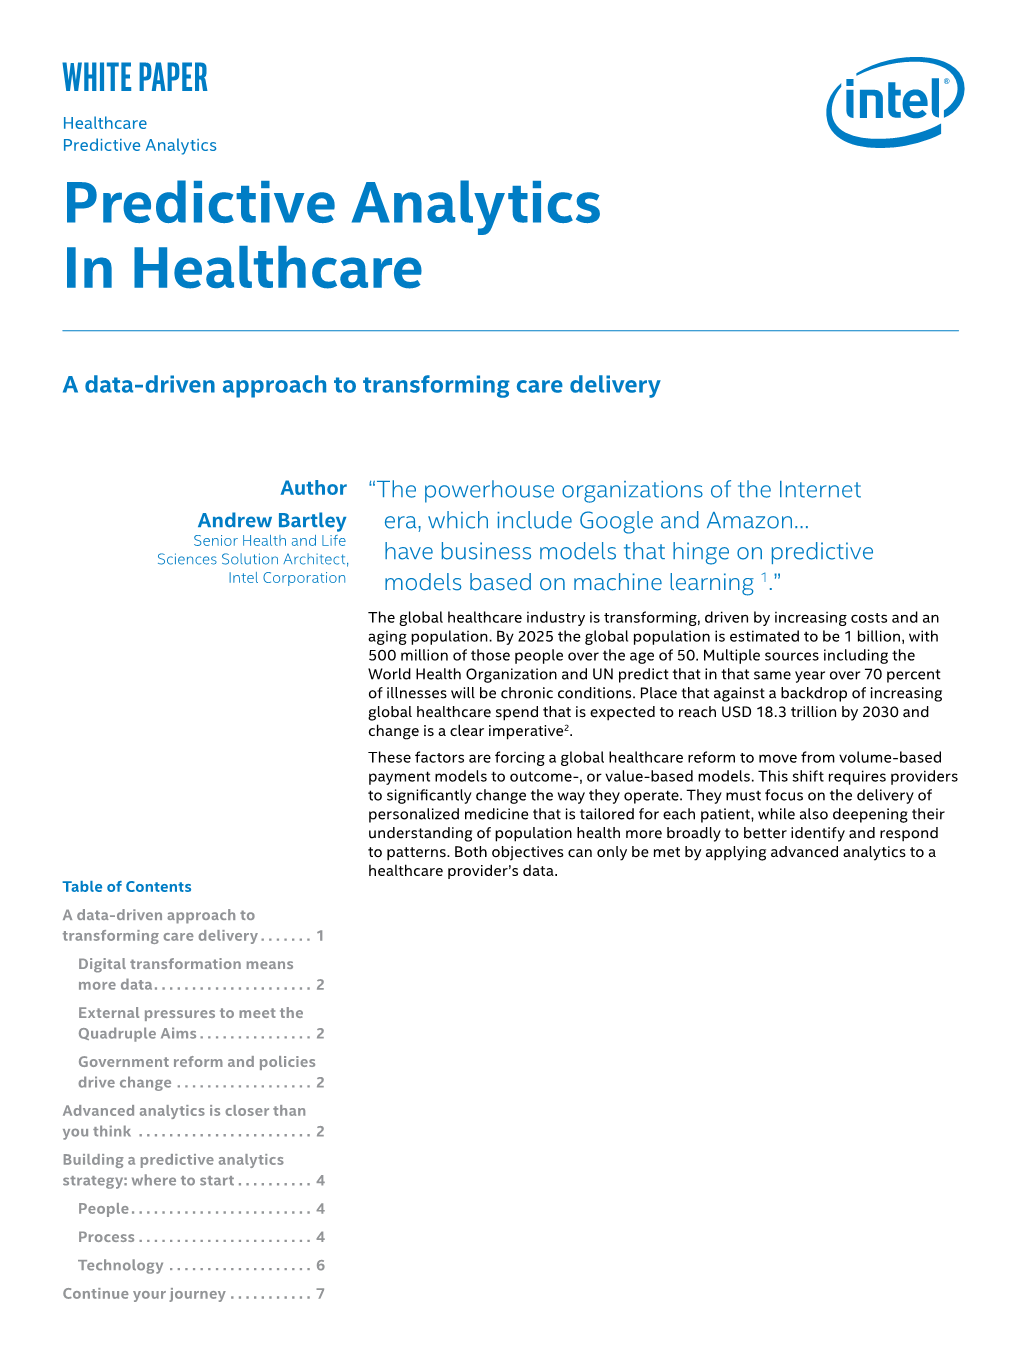 Predictive Analytics in Healthcare